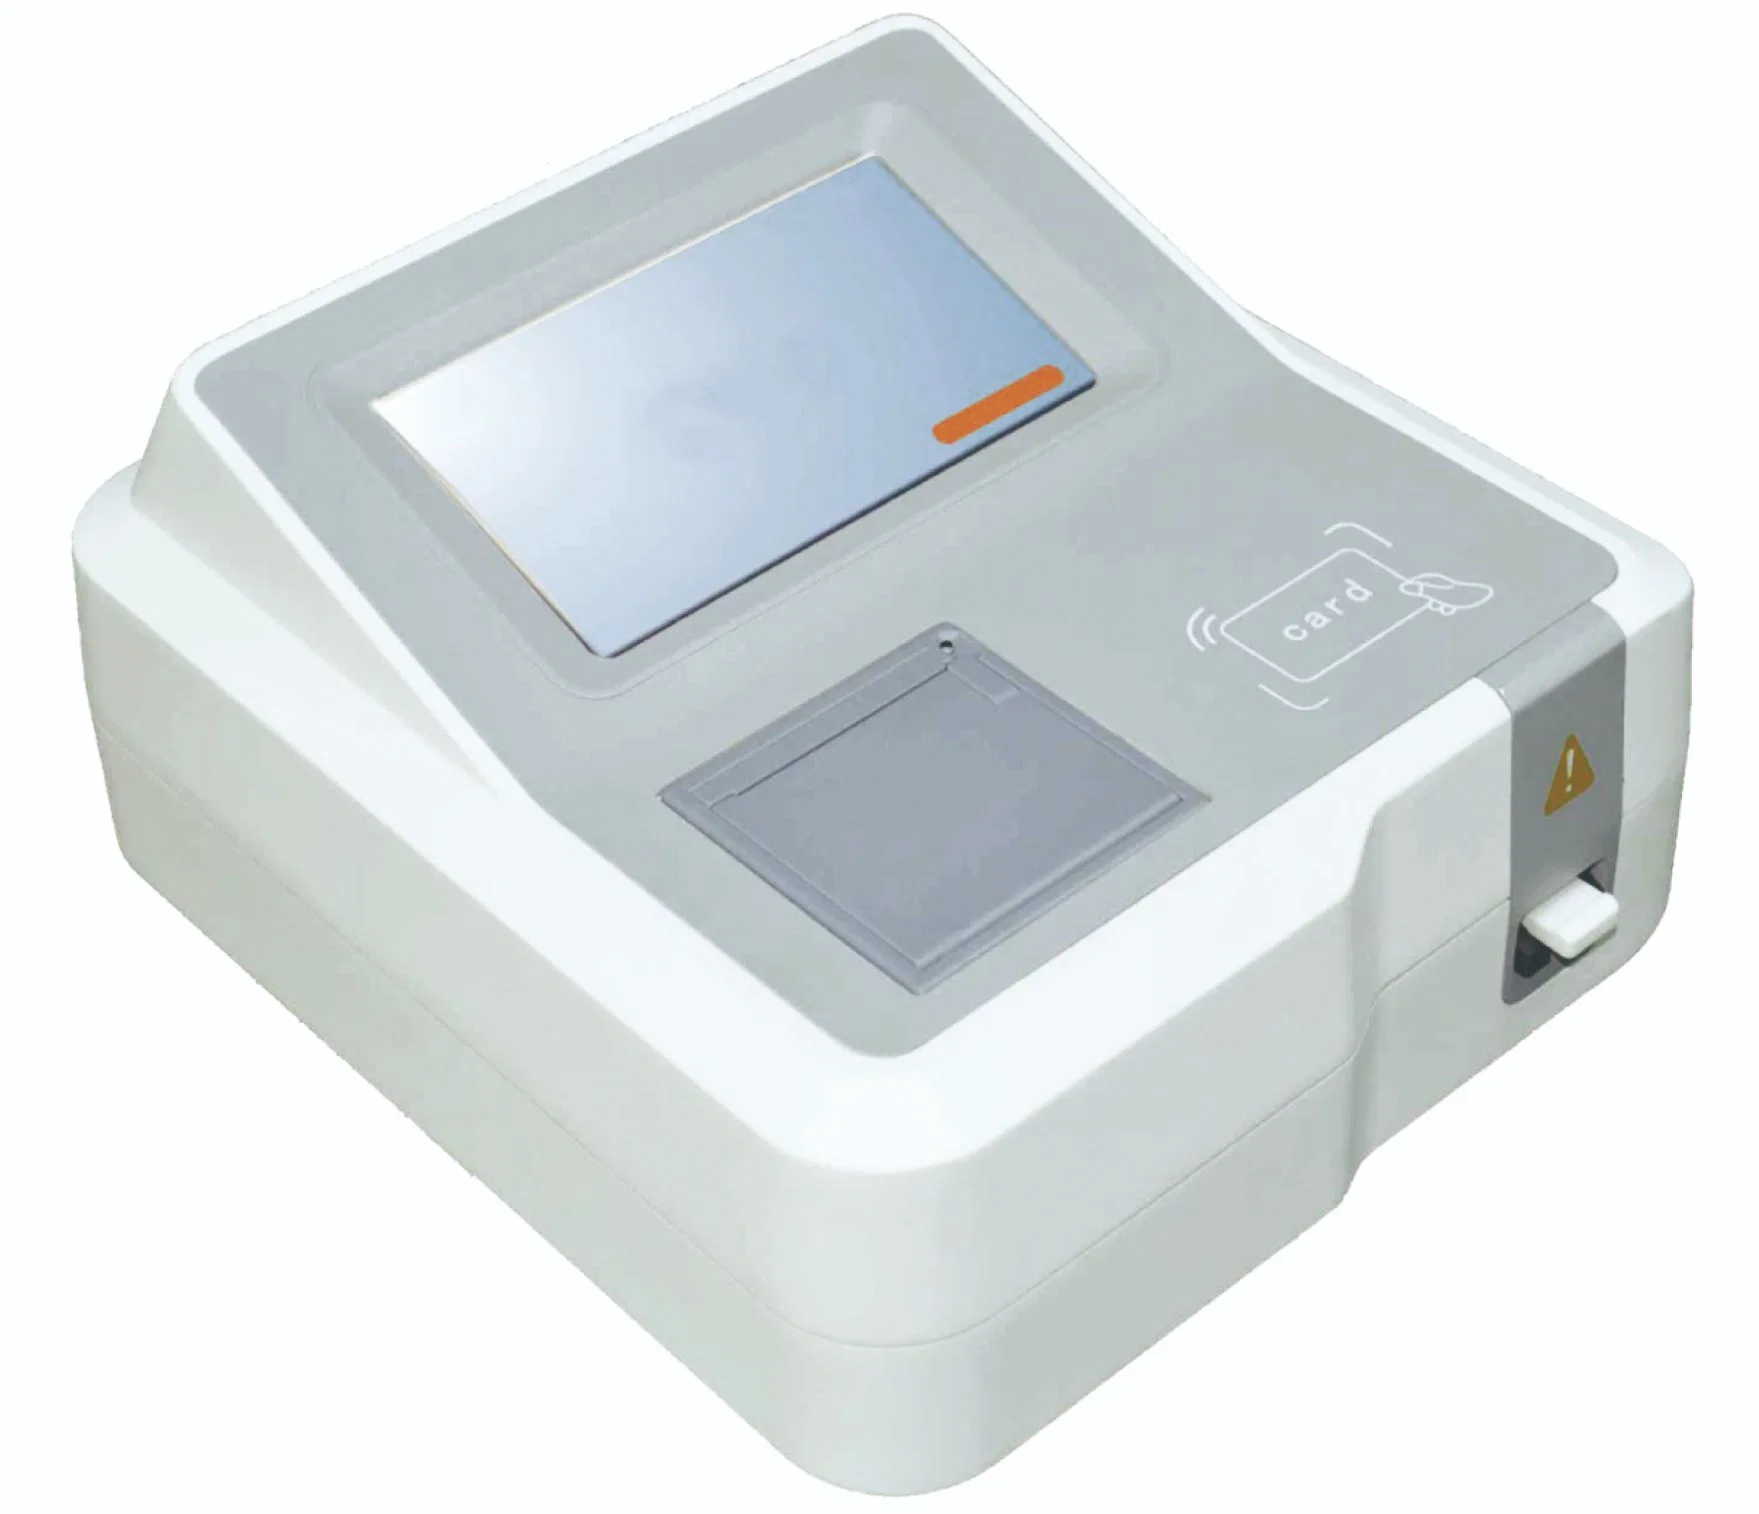 Hf 201 Medical Diagnostic Devices Equipment OEM Specification Hospital Test Kit Analyzer